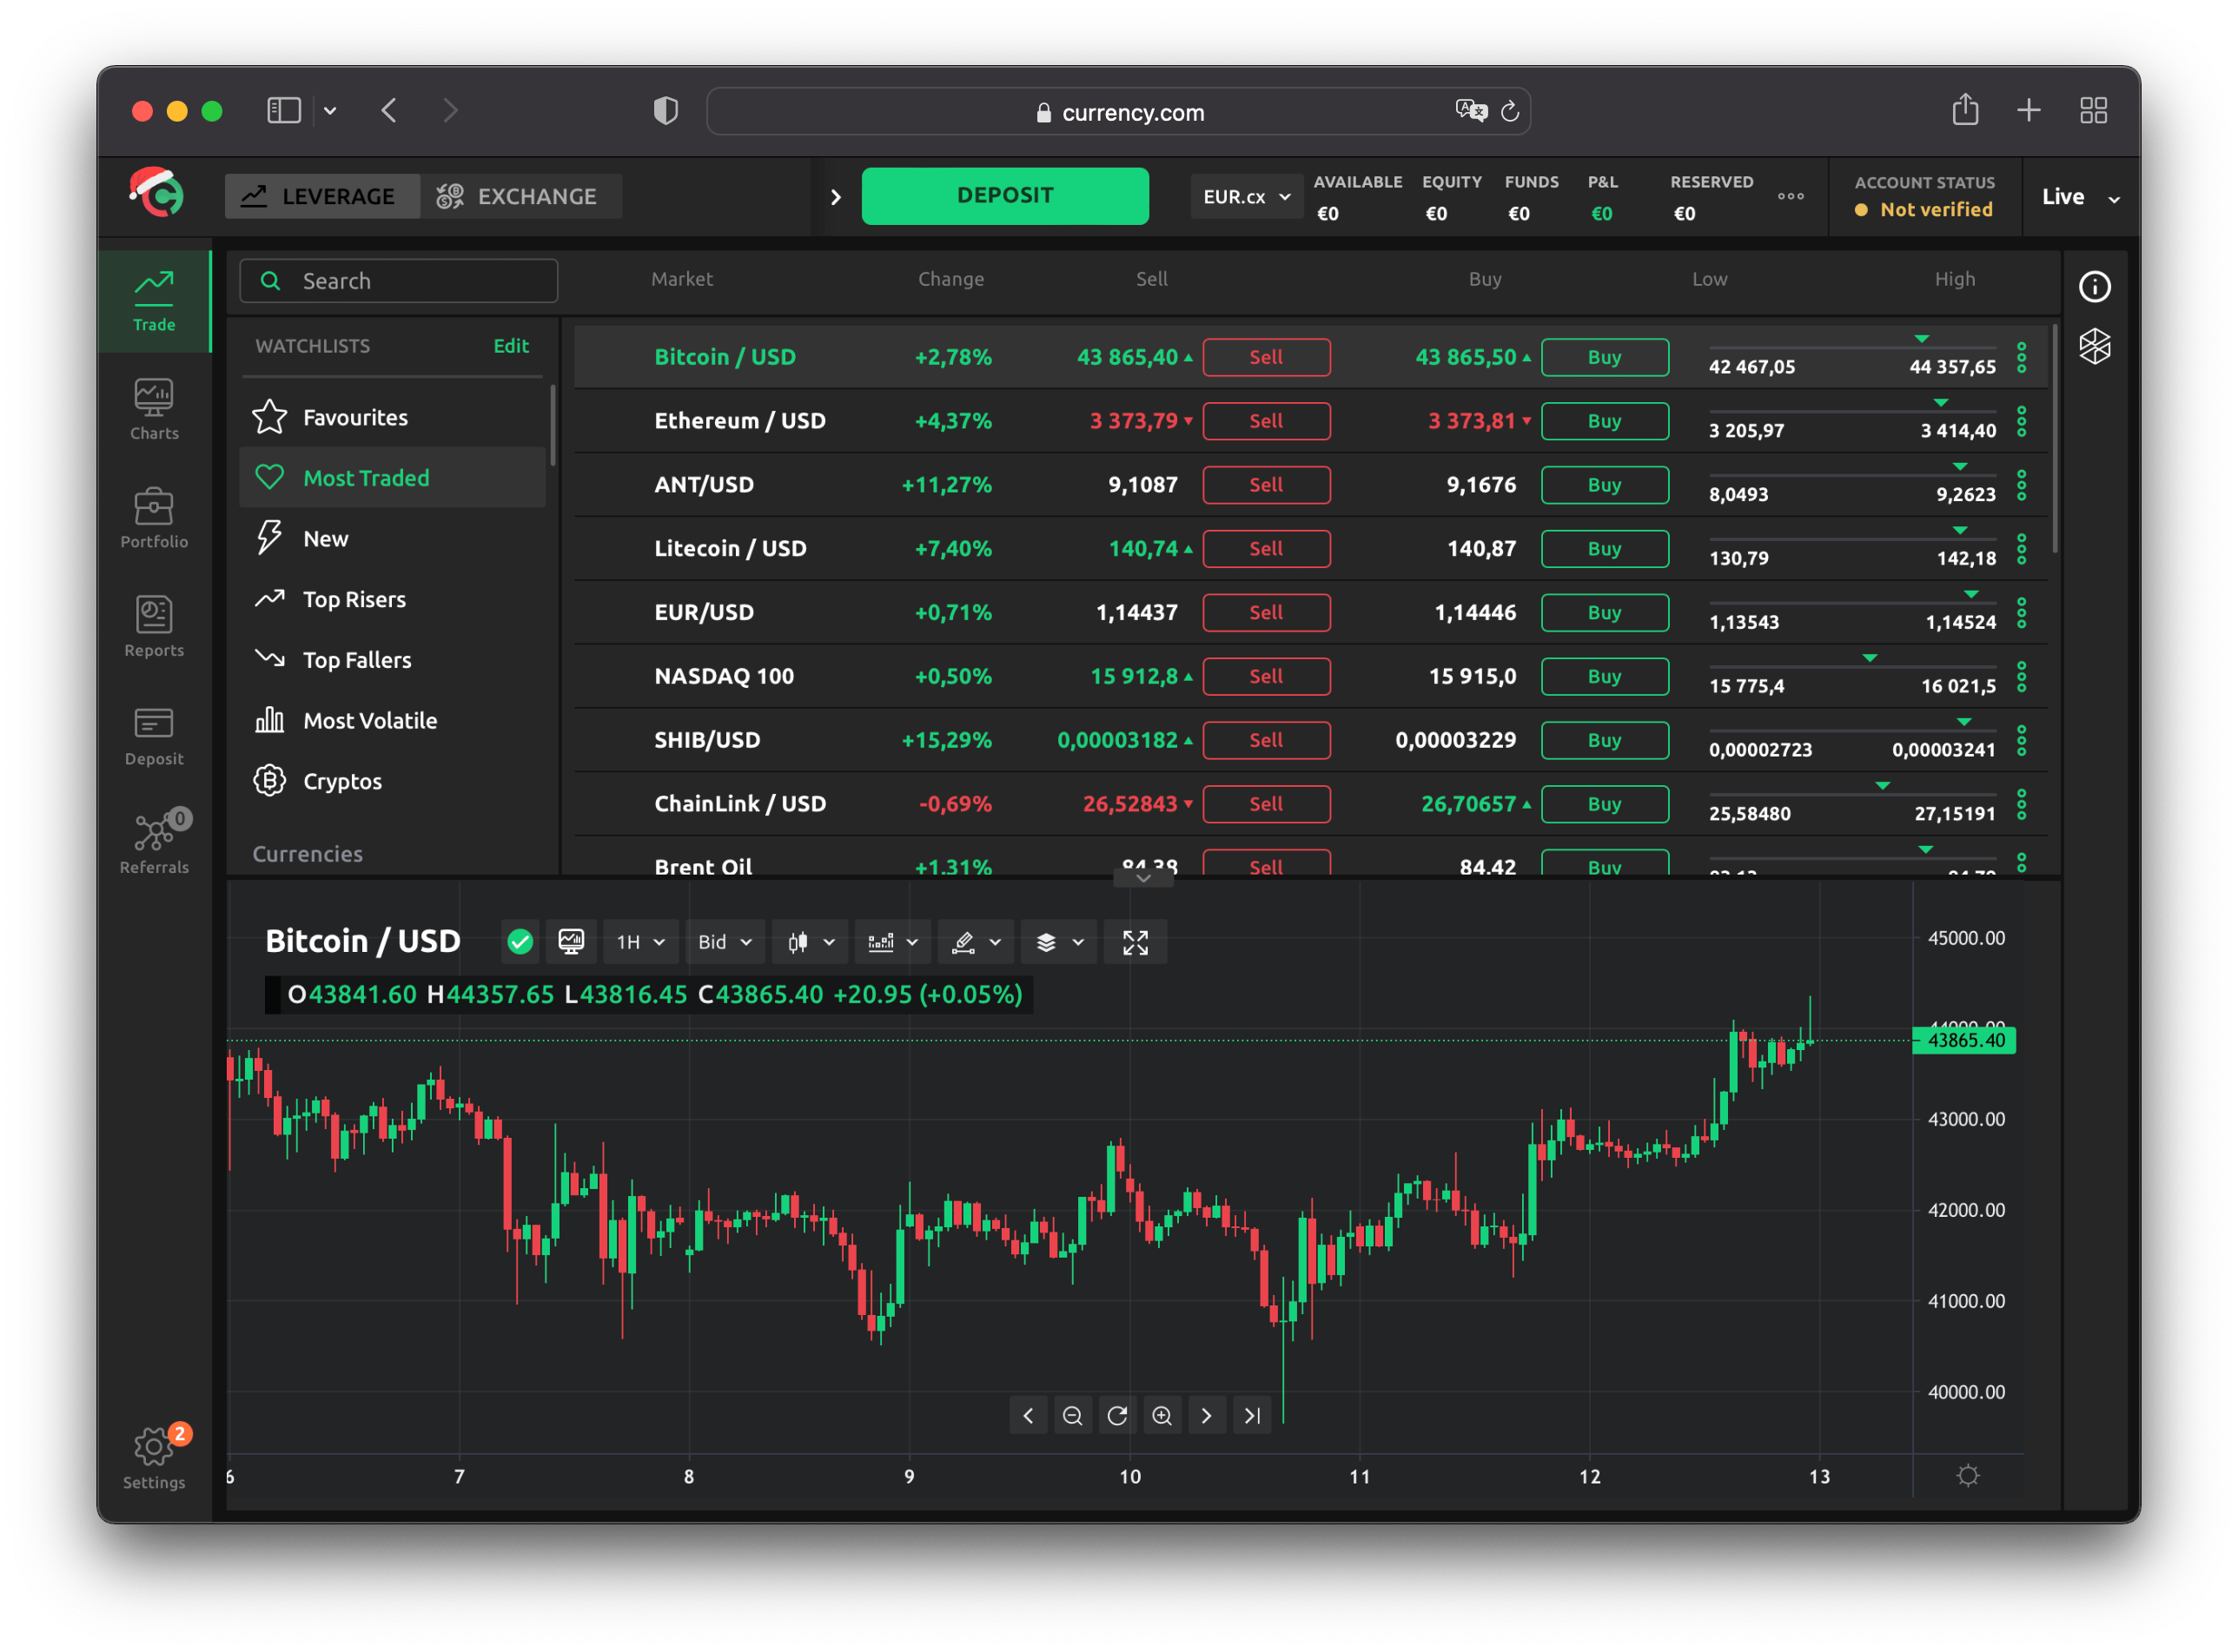 Currency.com Trading Platform